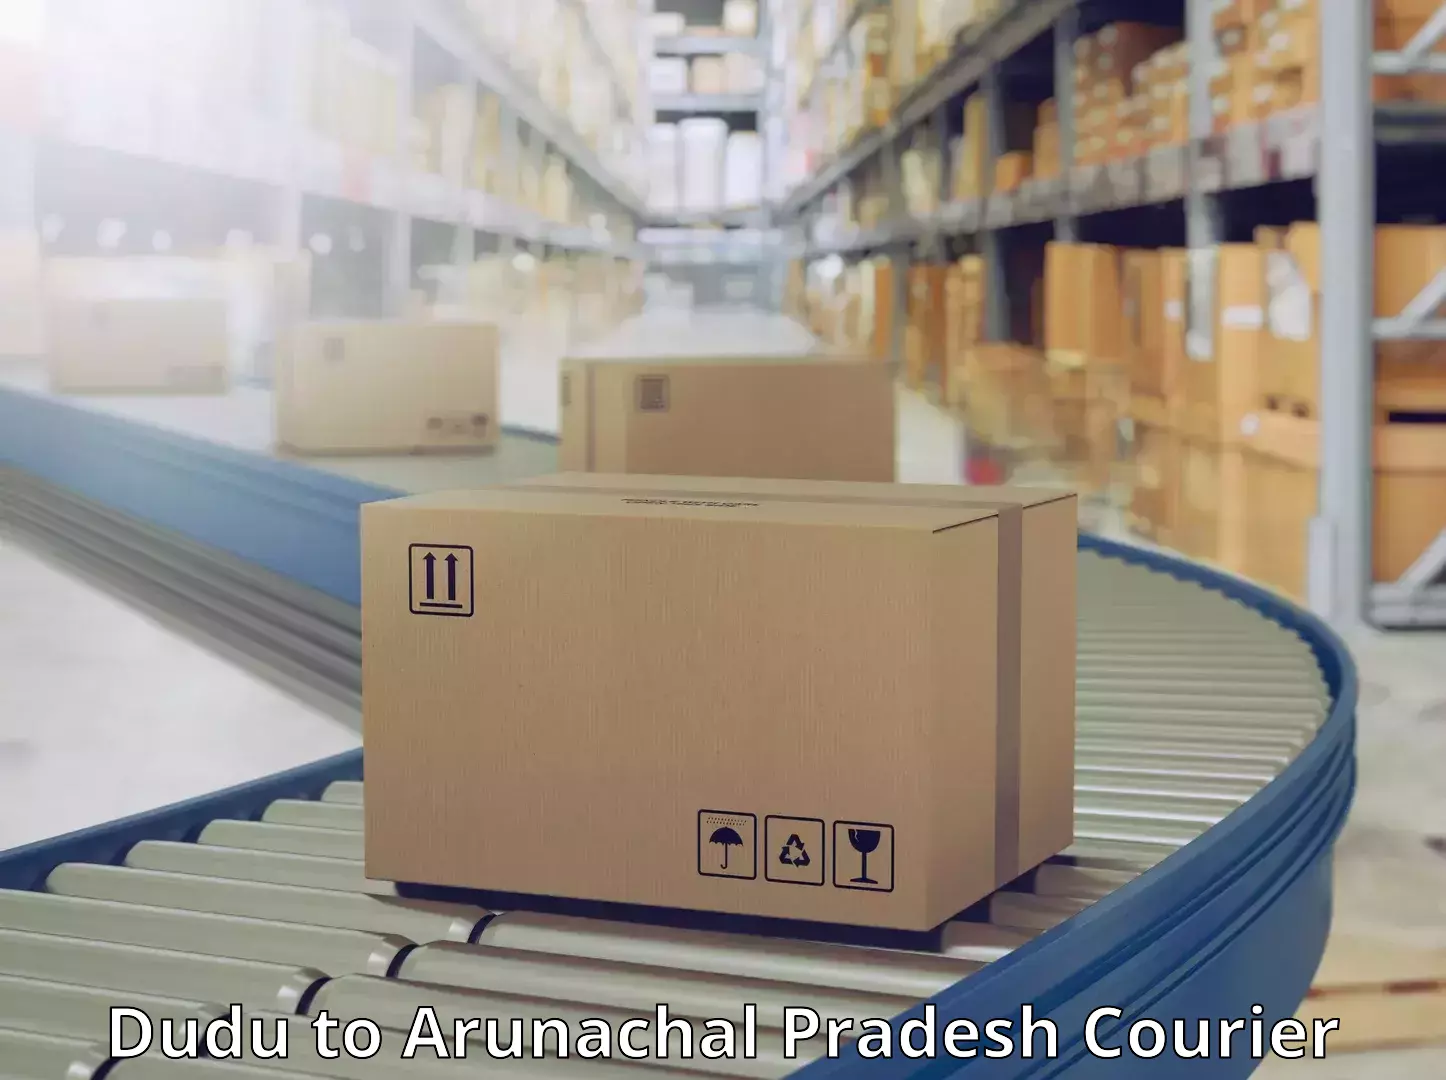 Logistics service provider Dudu to Arunachal Pradesh